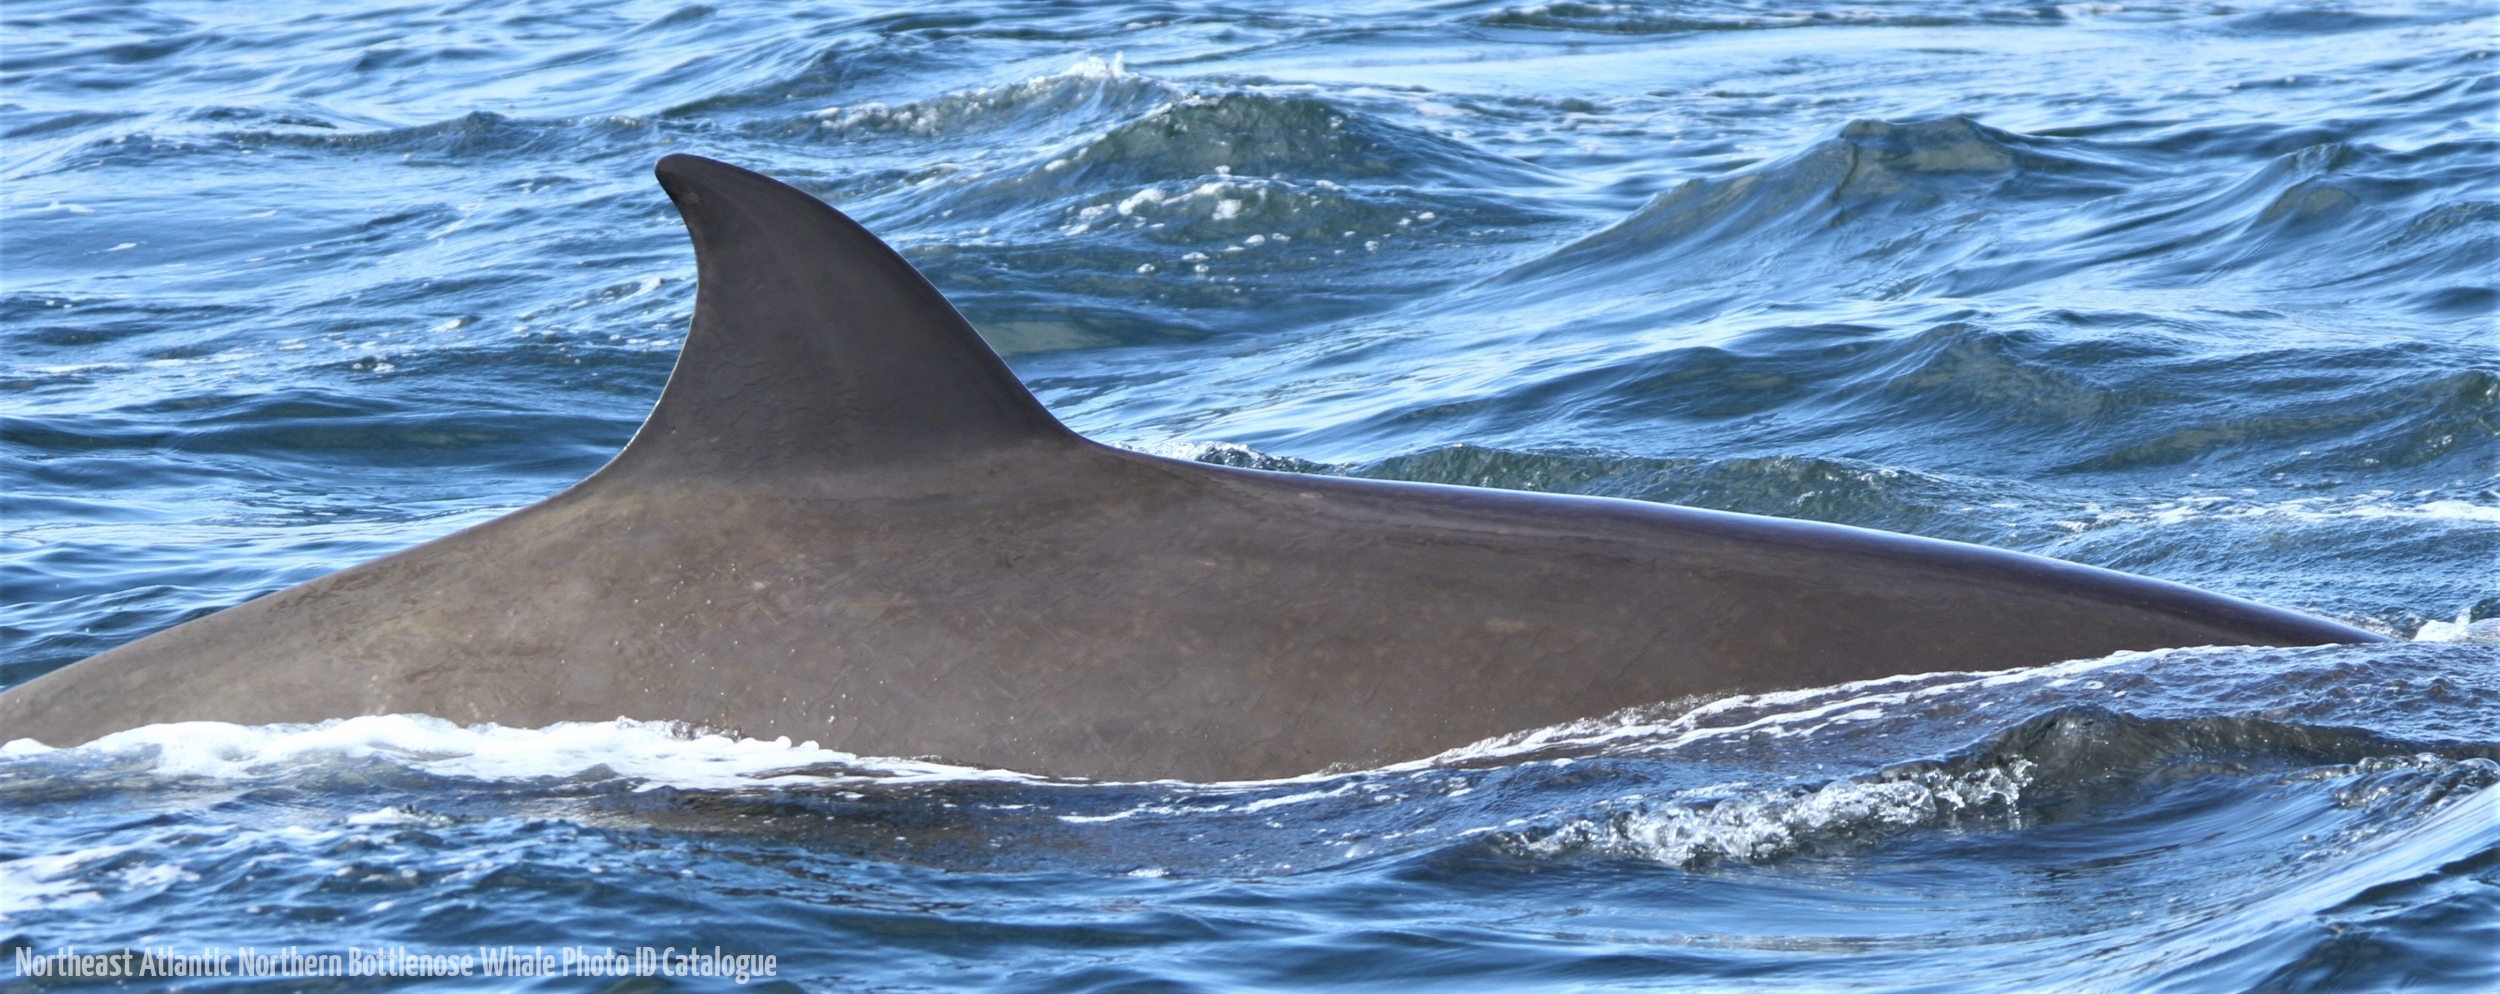 Whale ID: 0291,  Date taken: 24-06-2013,  Photographer: Paul H. Ensor